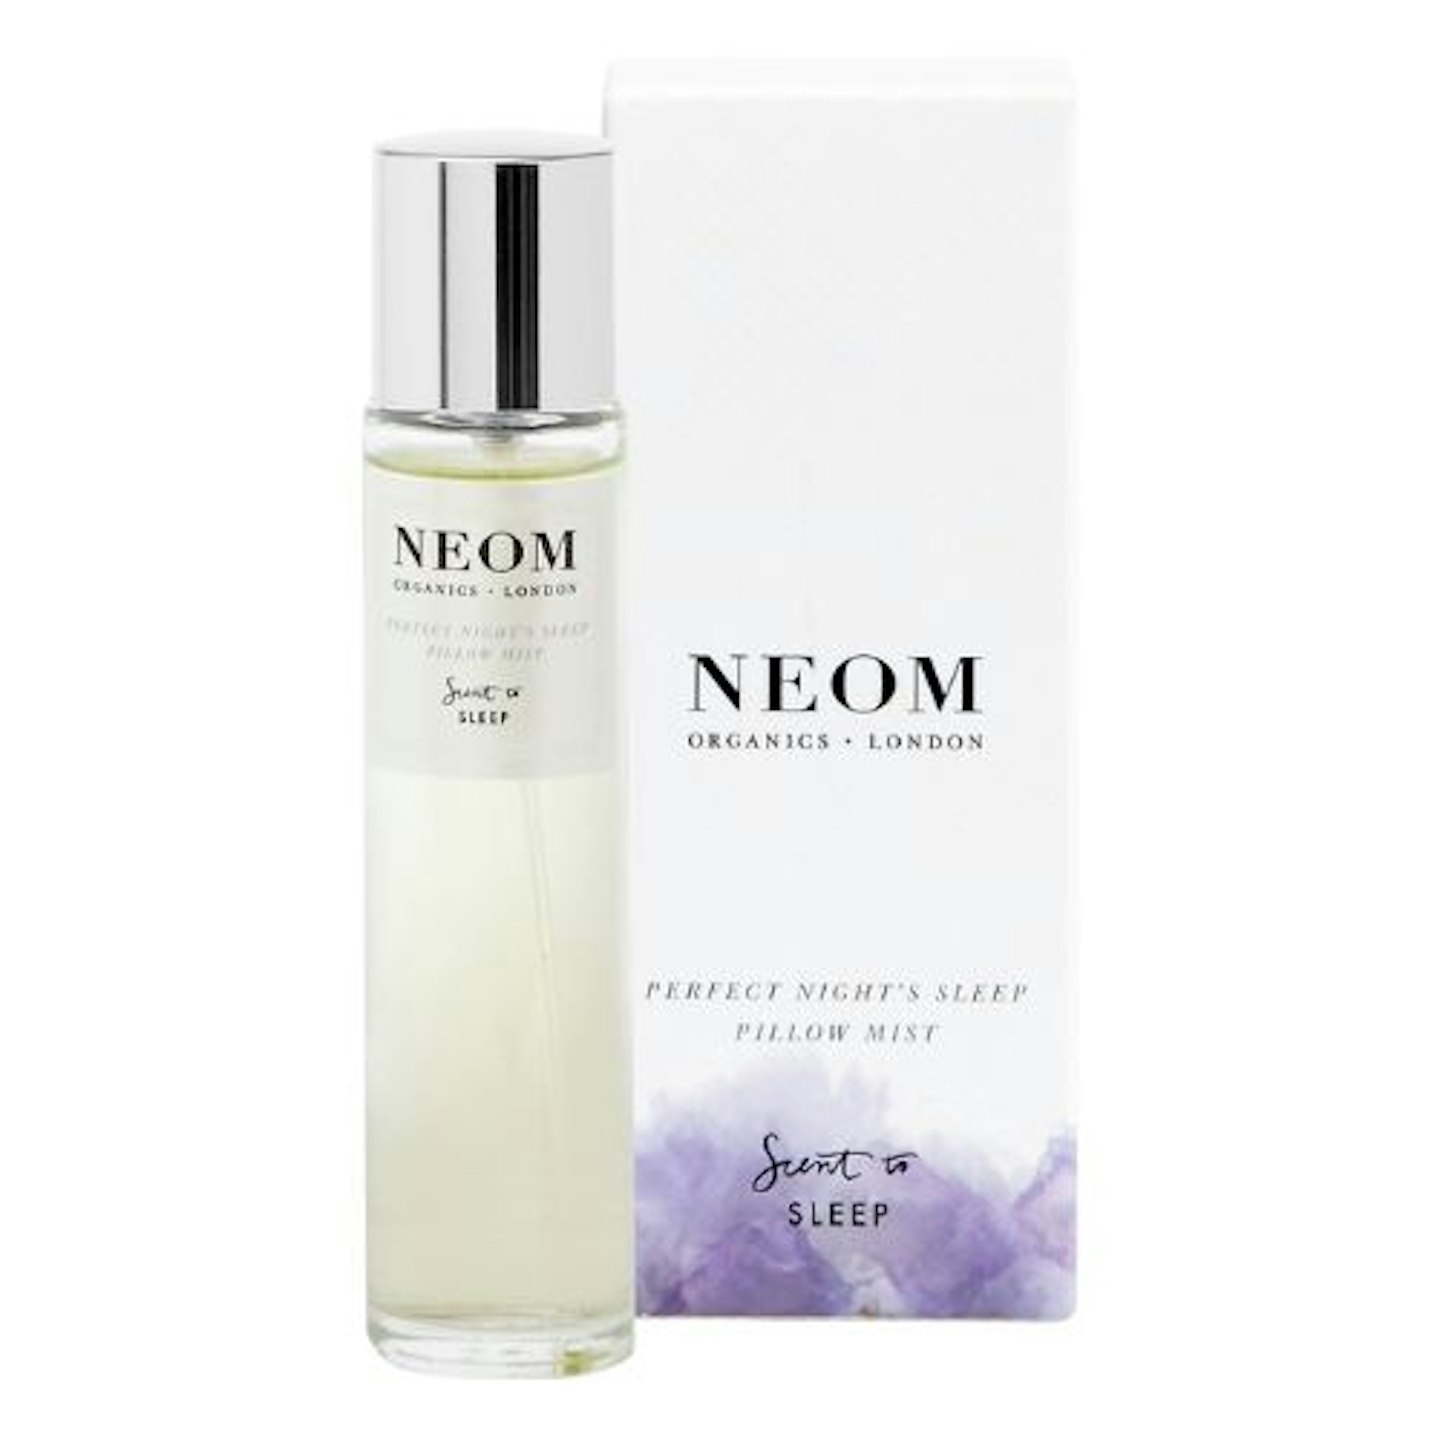 NEOM- Perfect Night's Sleep Pillow Mist Spray, 30ml | Lavender & Jasmine | Scent to Sleep